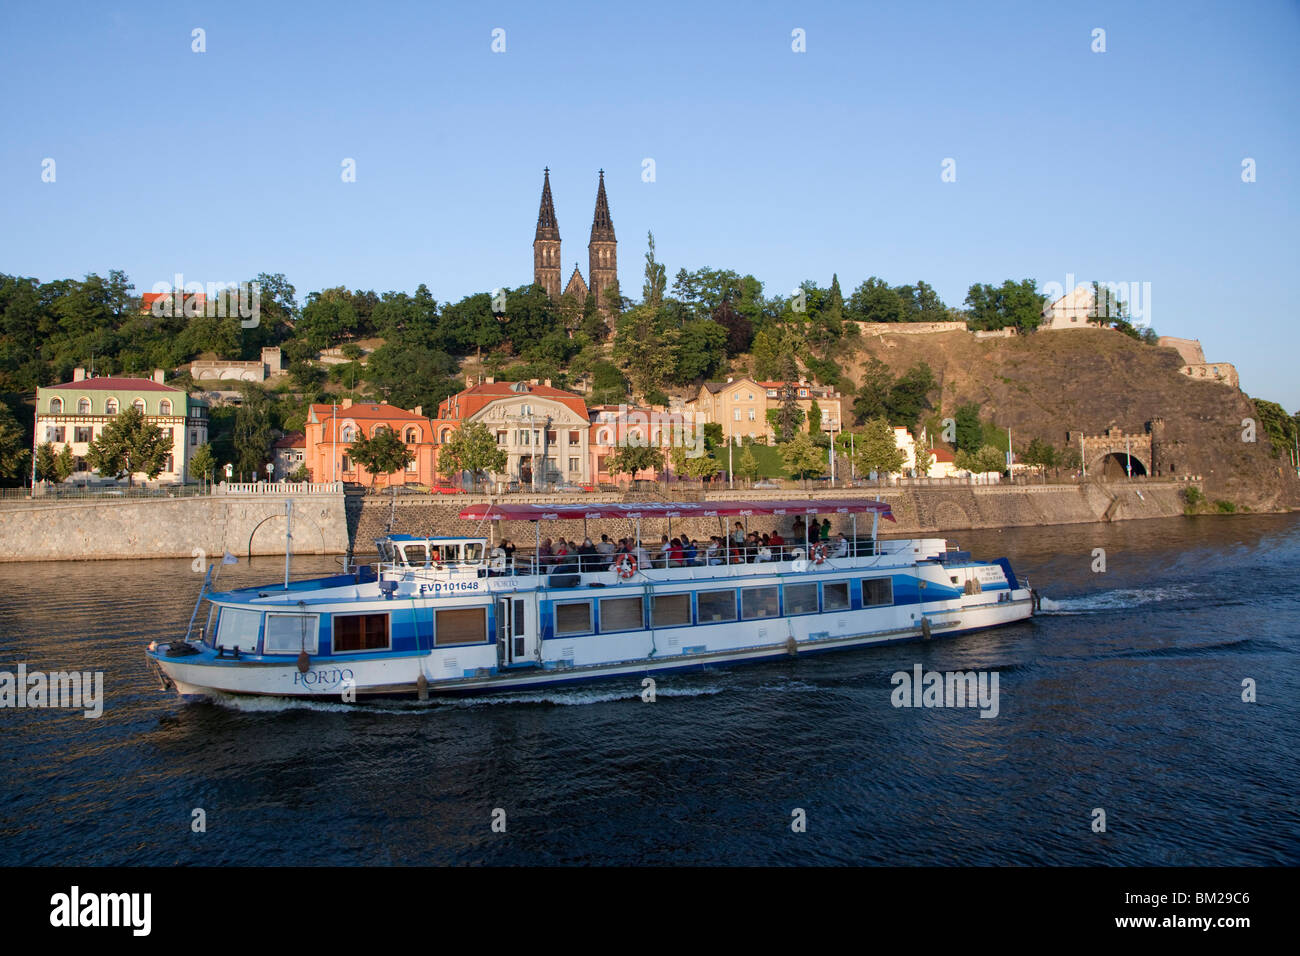 High Castle (Vysehrad) and river boat on Vltava River, Prague, Czech Republic Stock Photo